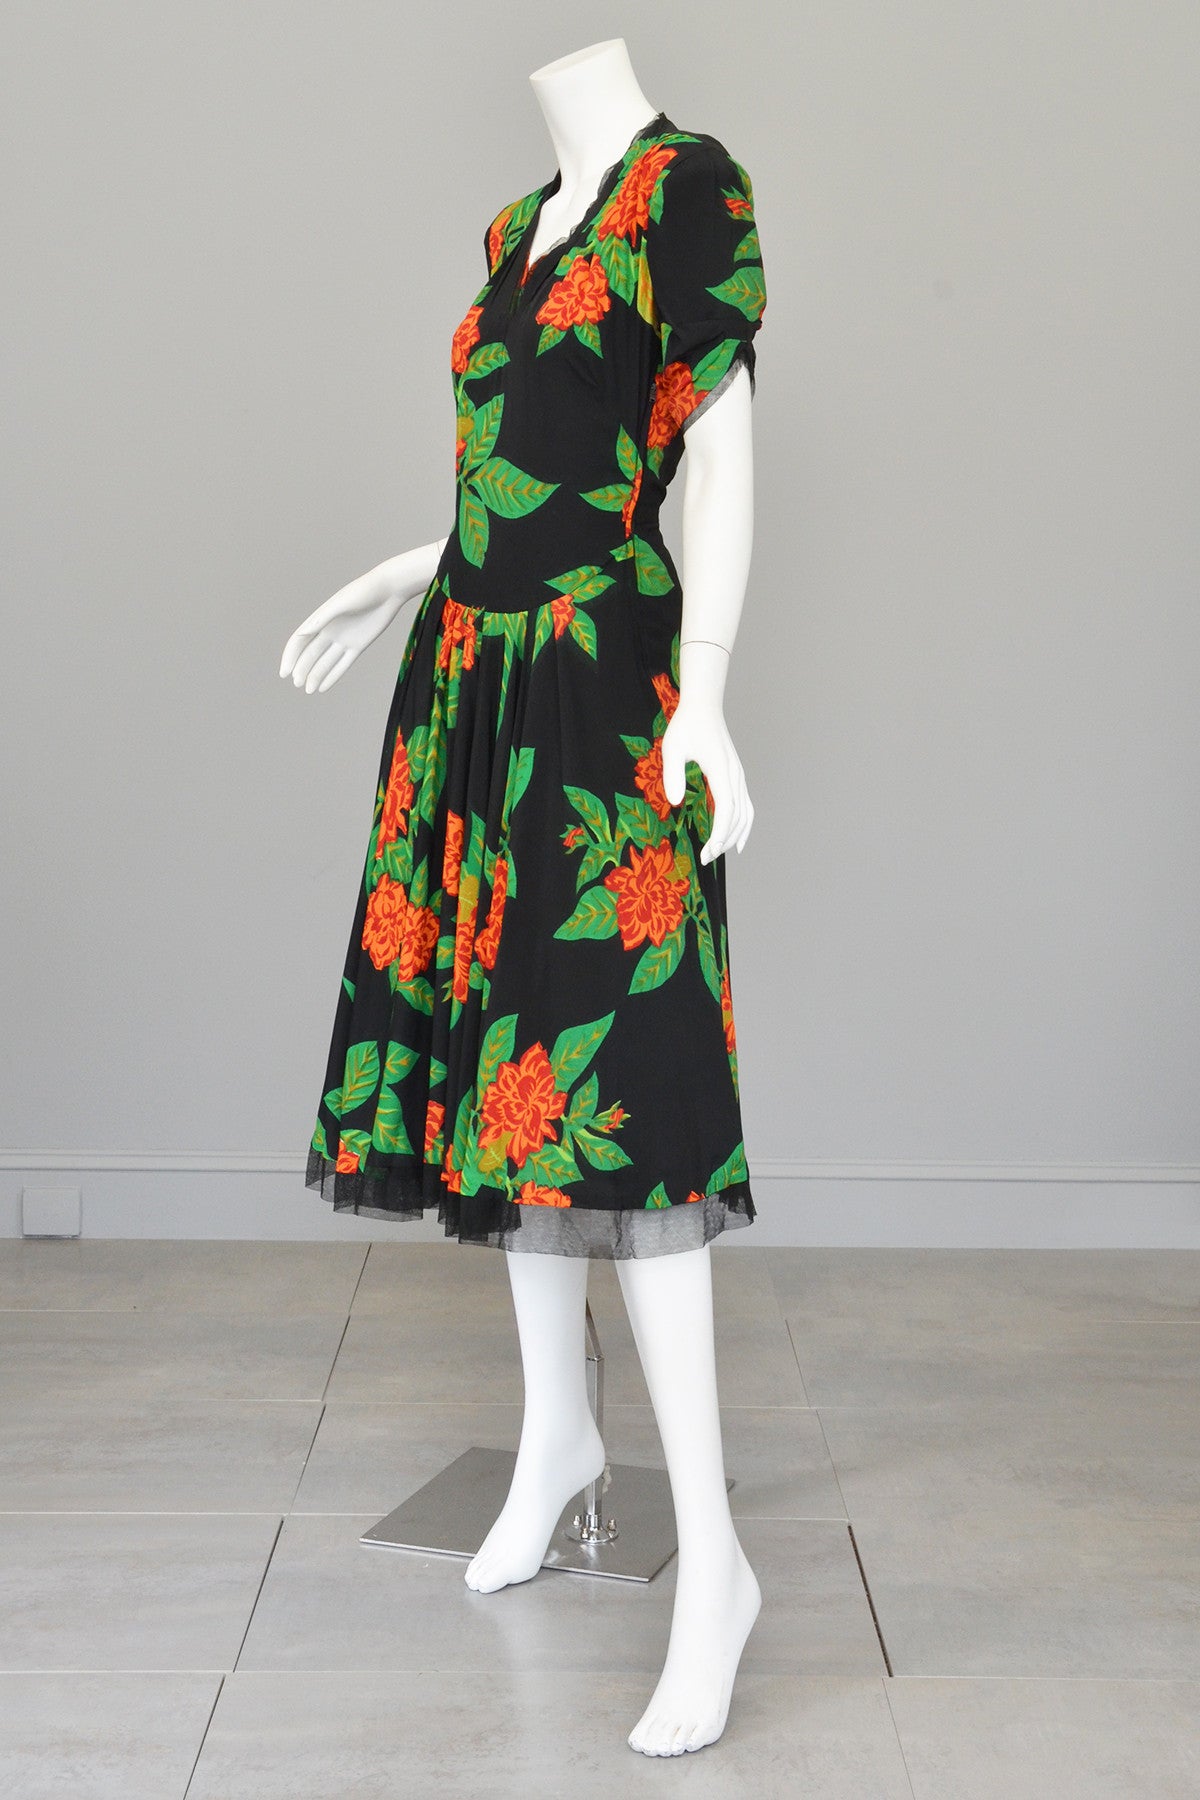 Vintage 1940s Novelty Print Party Dress Tropical Print